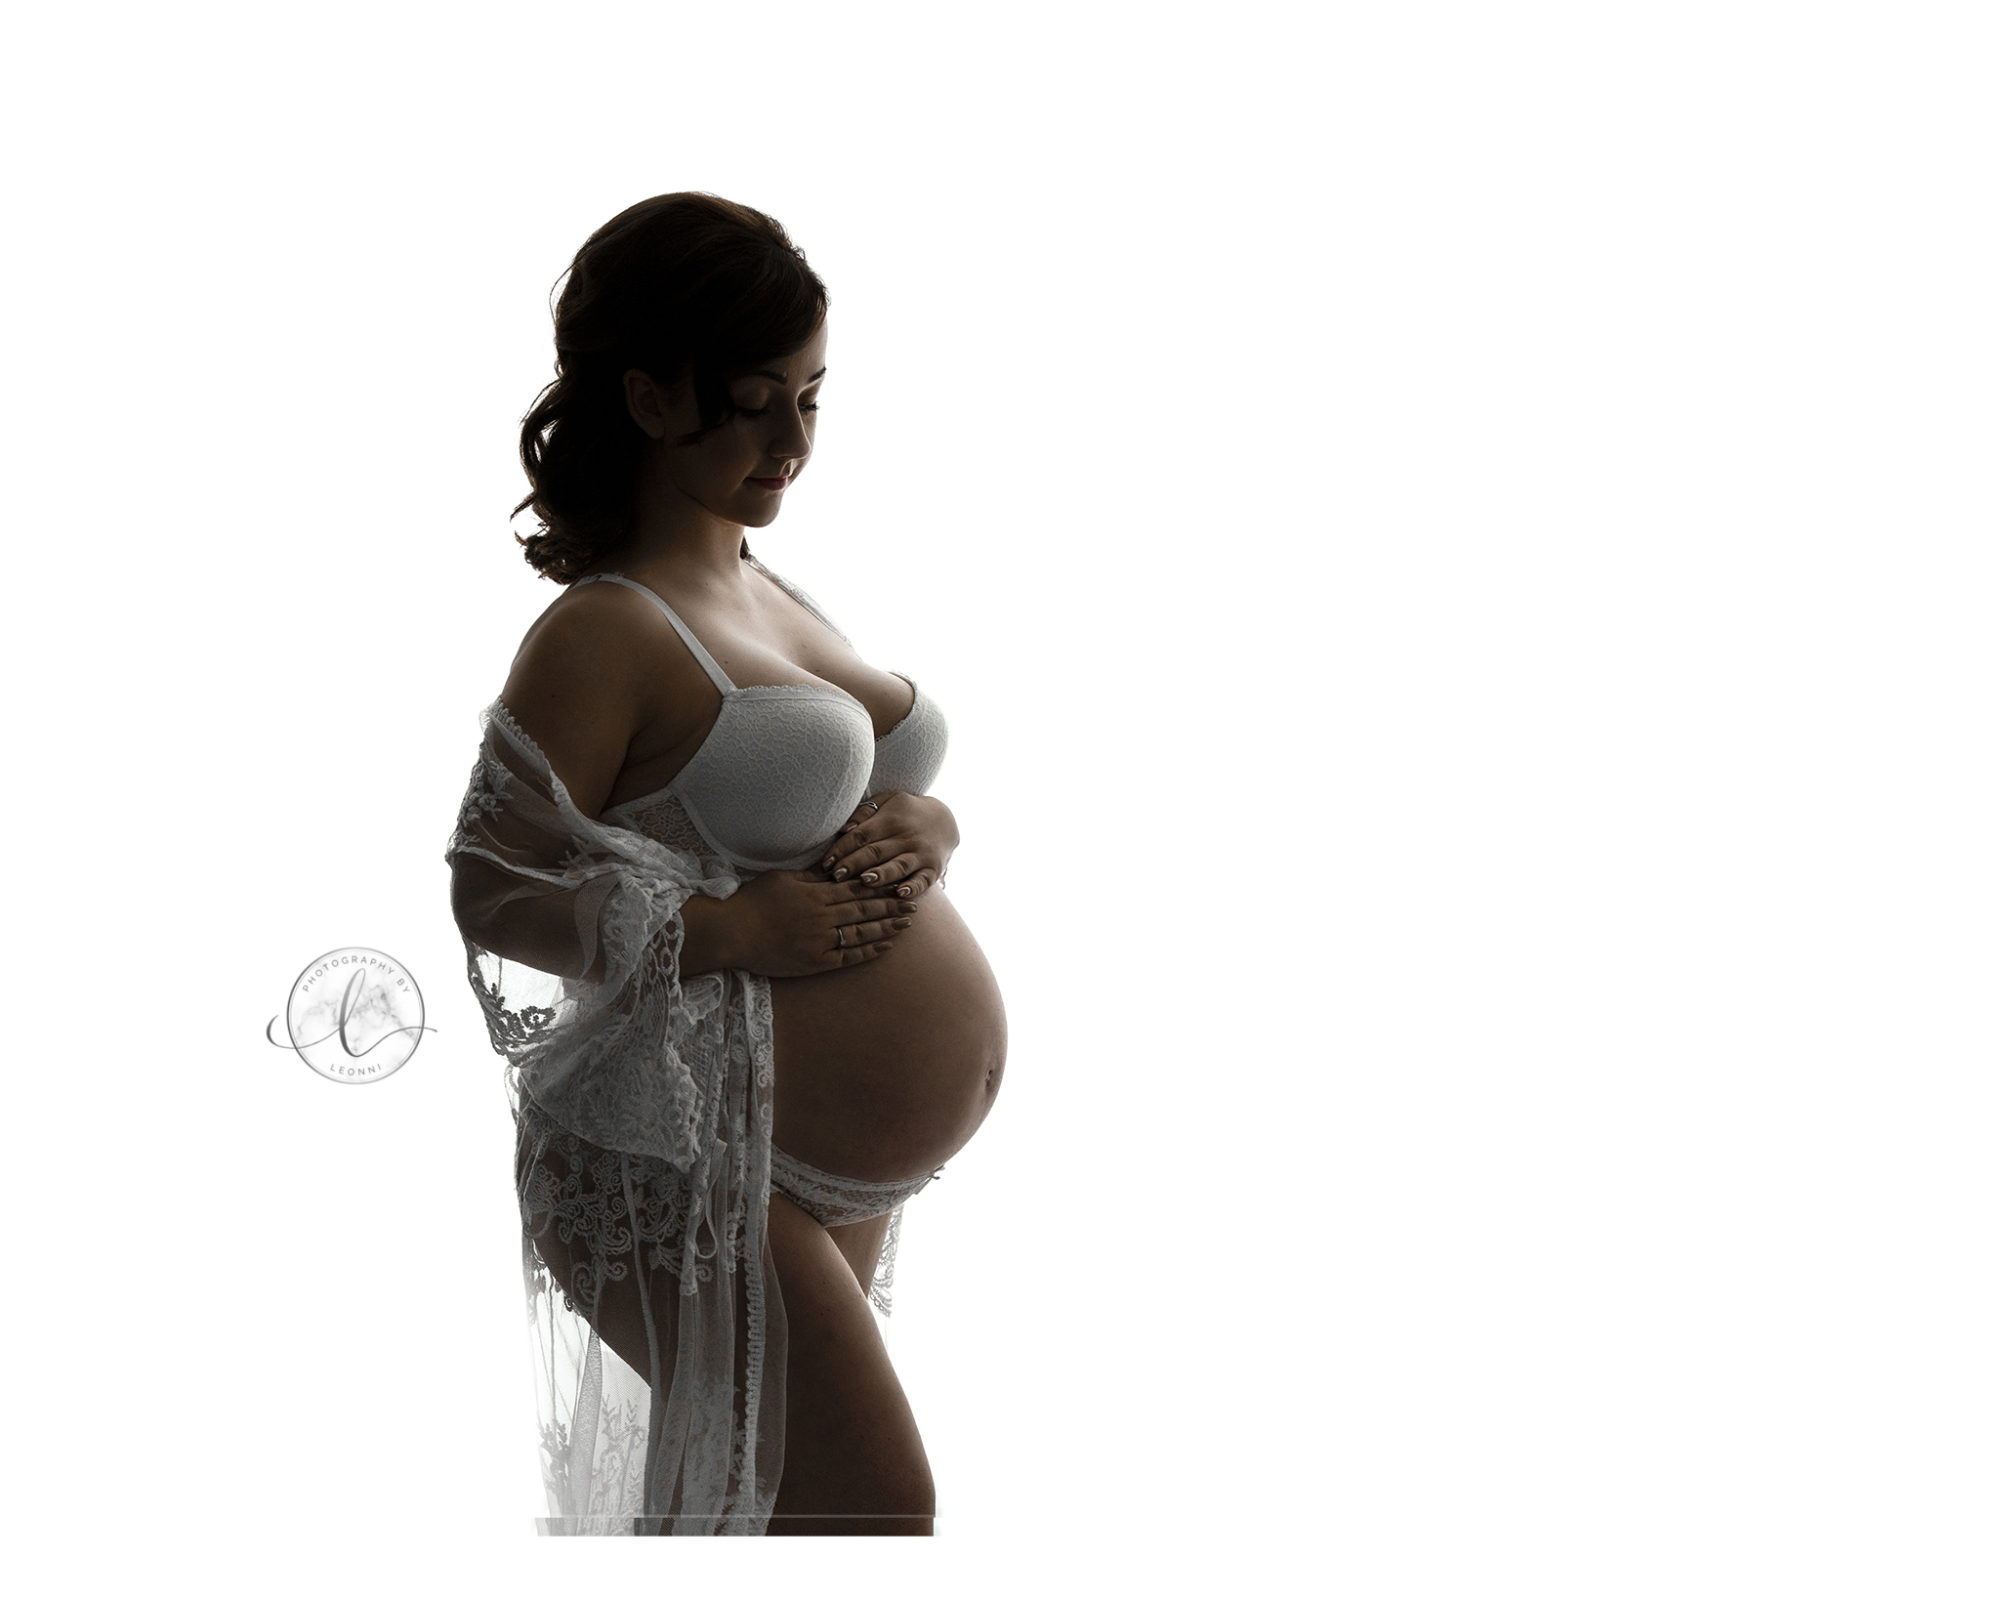 Pregnancy photos stockport